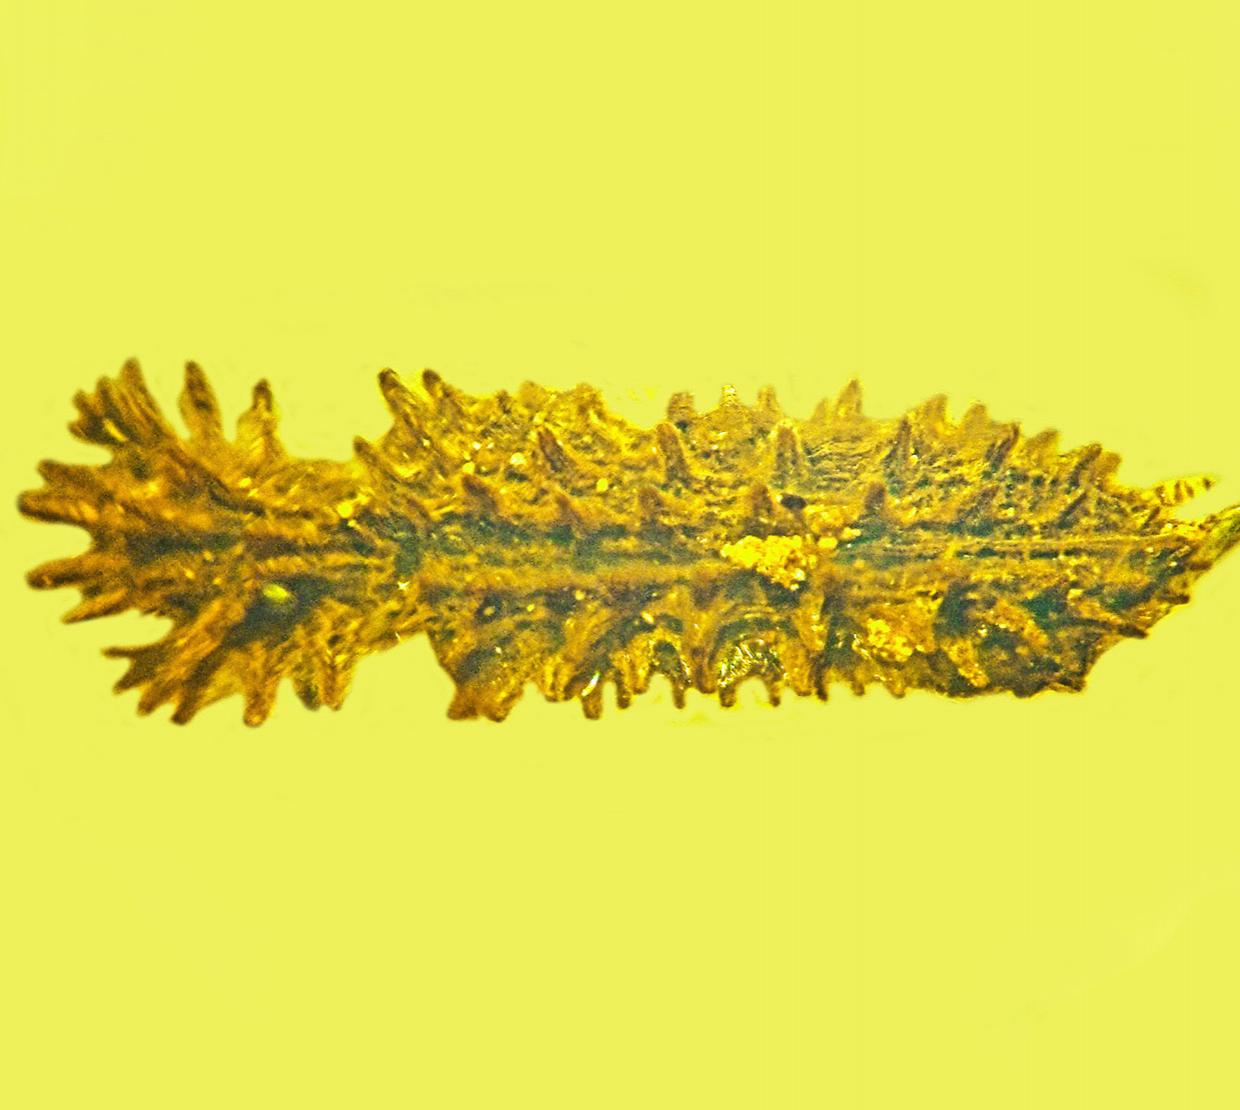 Stegastochlidus saraemcheana, a species of cylindrical bark beetle sitting in yellow amber.